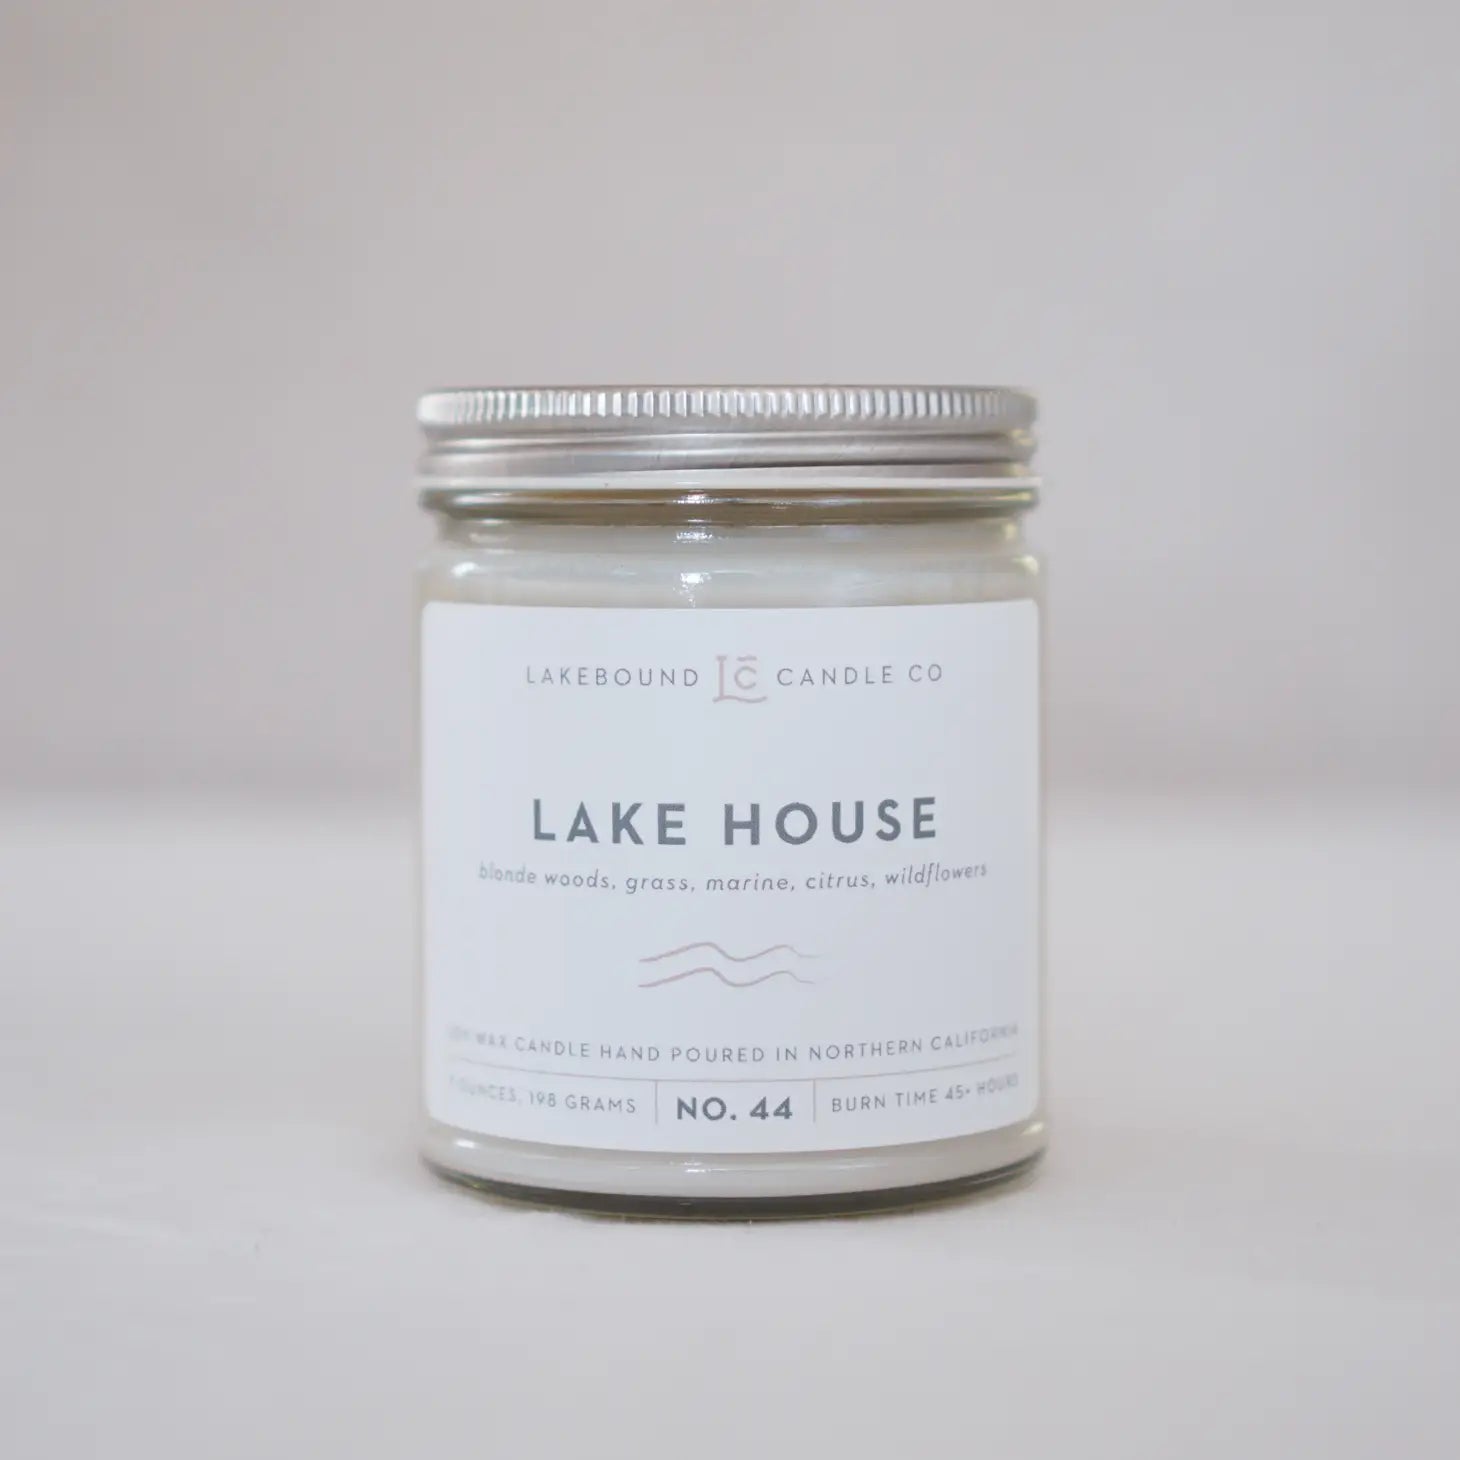 Lake House Soy Candle - Lulie